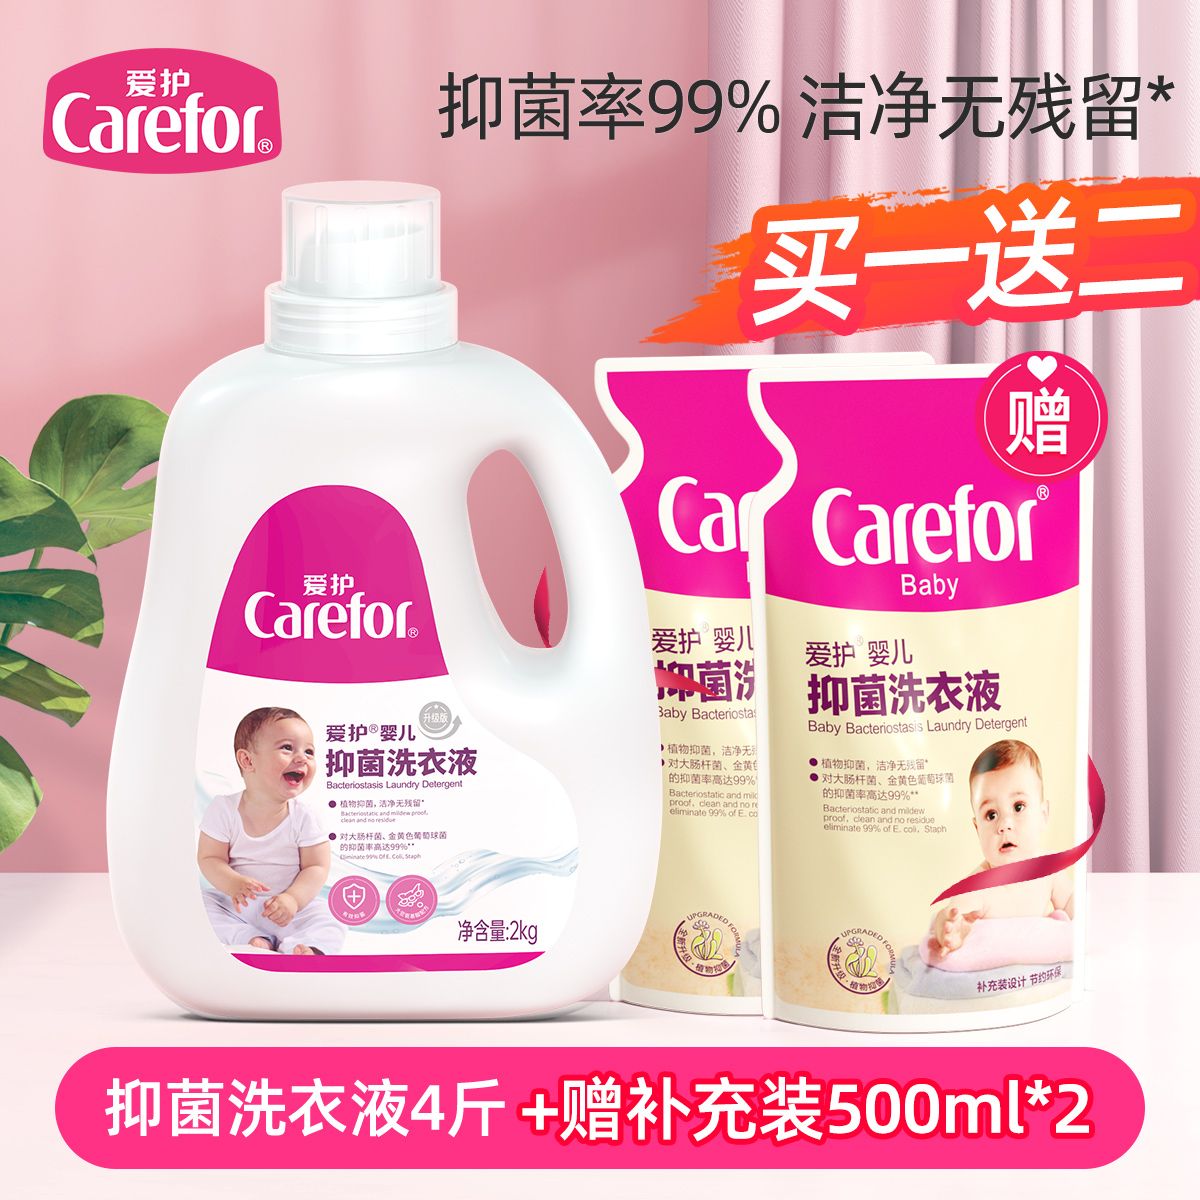 Carefor 爱护 抑菌除螨洗衣液 新生儿宝宝专用多效除螨洗衣皂液 婴儿洗衣液 1